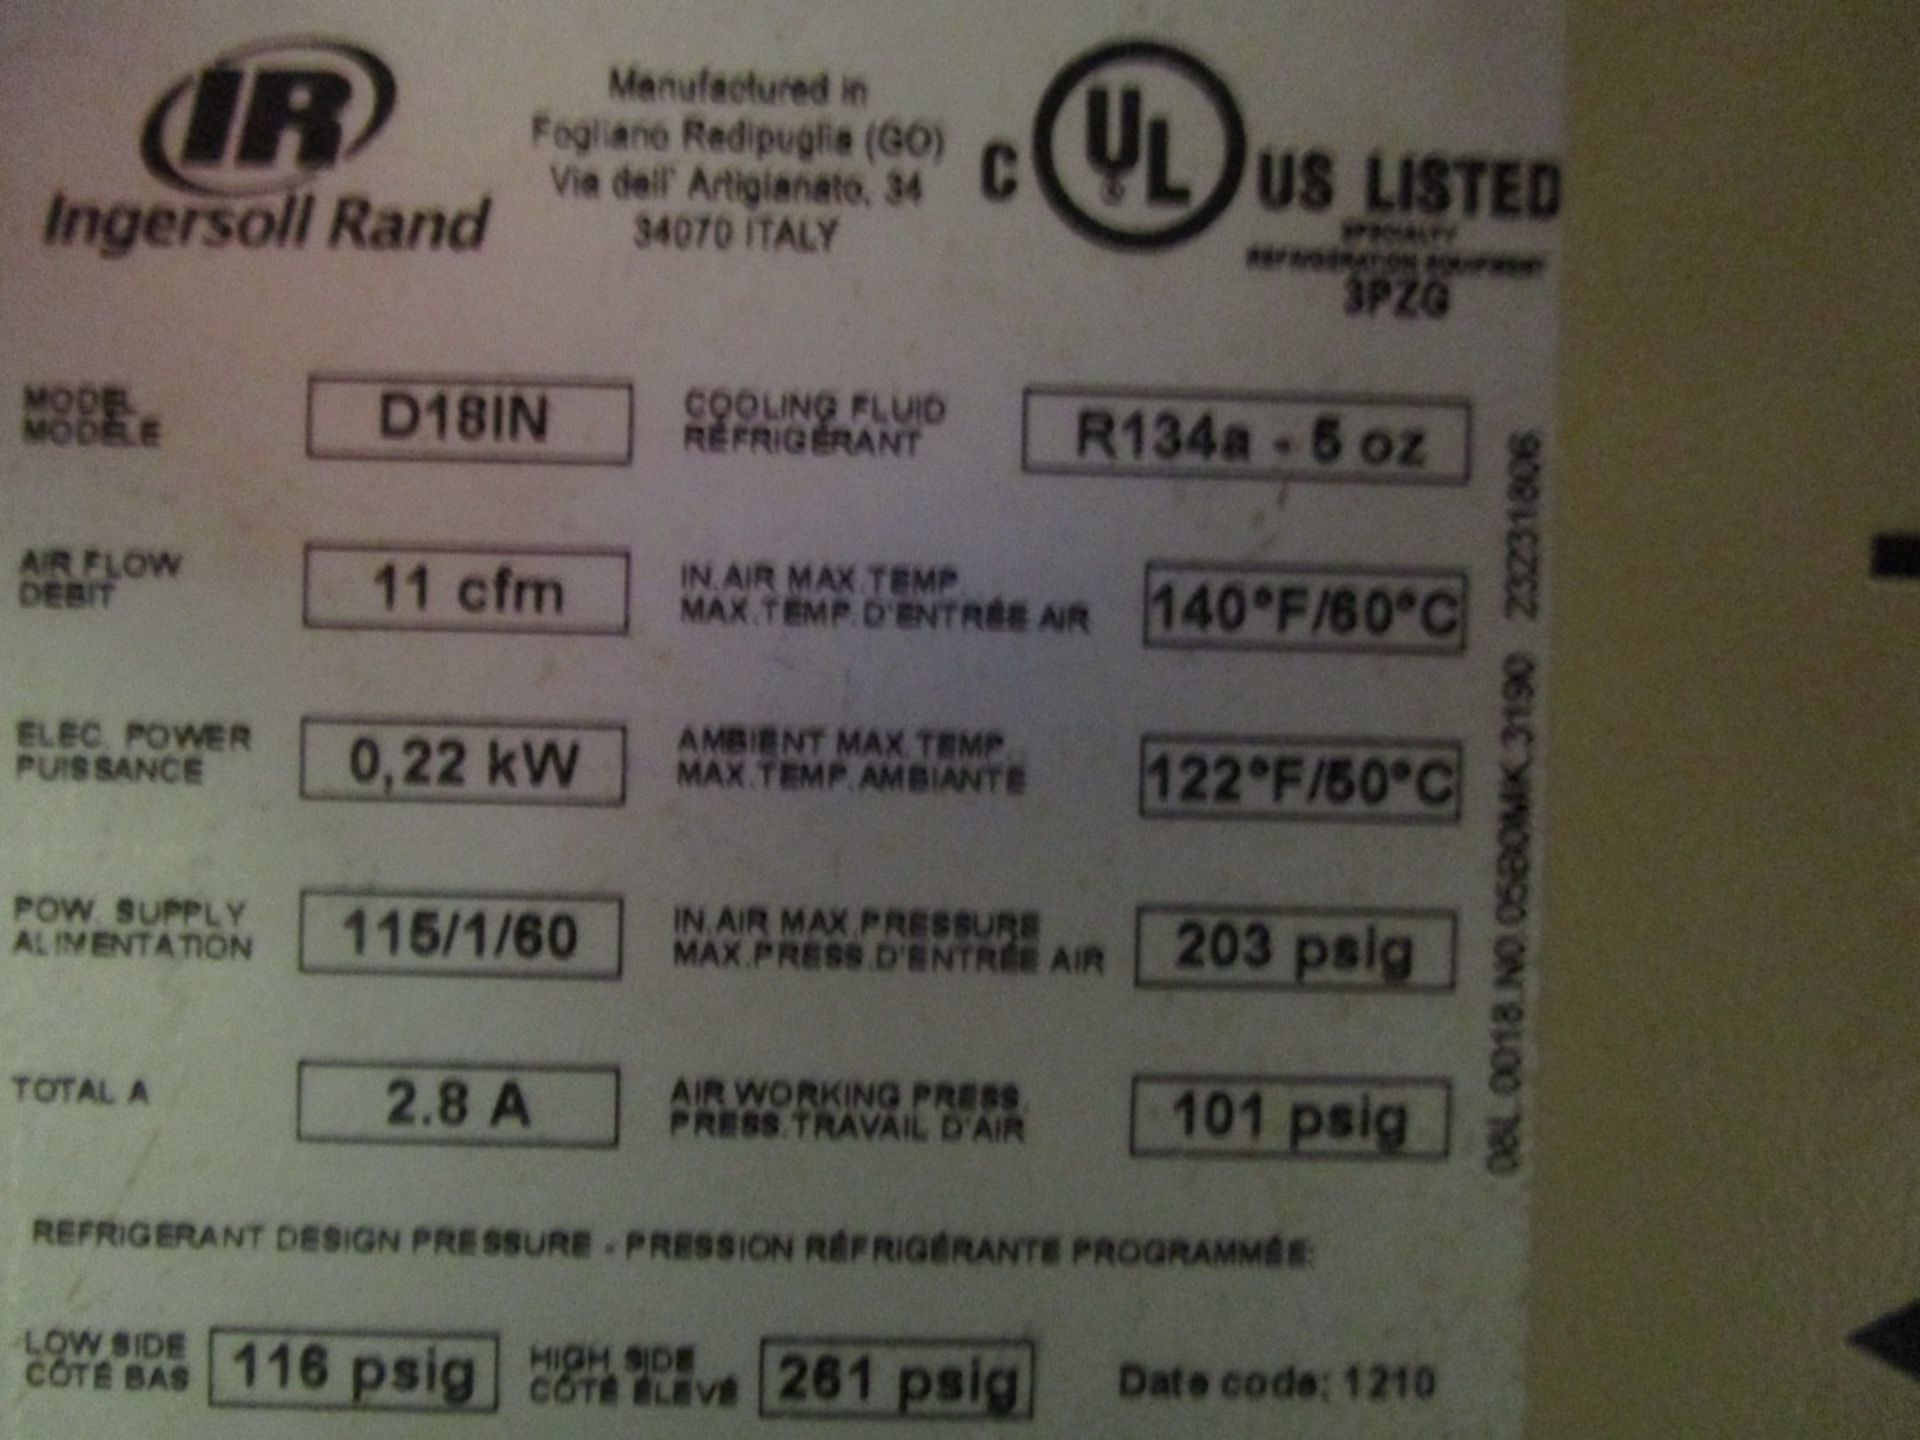 Ingersoll Rand 2545E-10V-V Tank mounted Air compressor s/n CBV286233, 10HP, IR D18IN | Rig Fee: $150 - Image 6 of 6